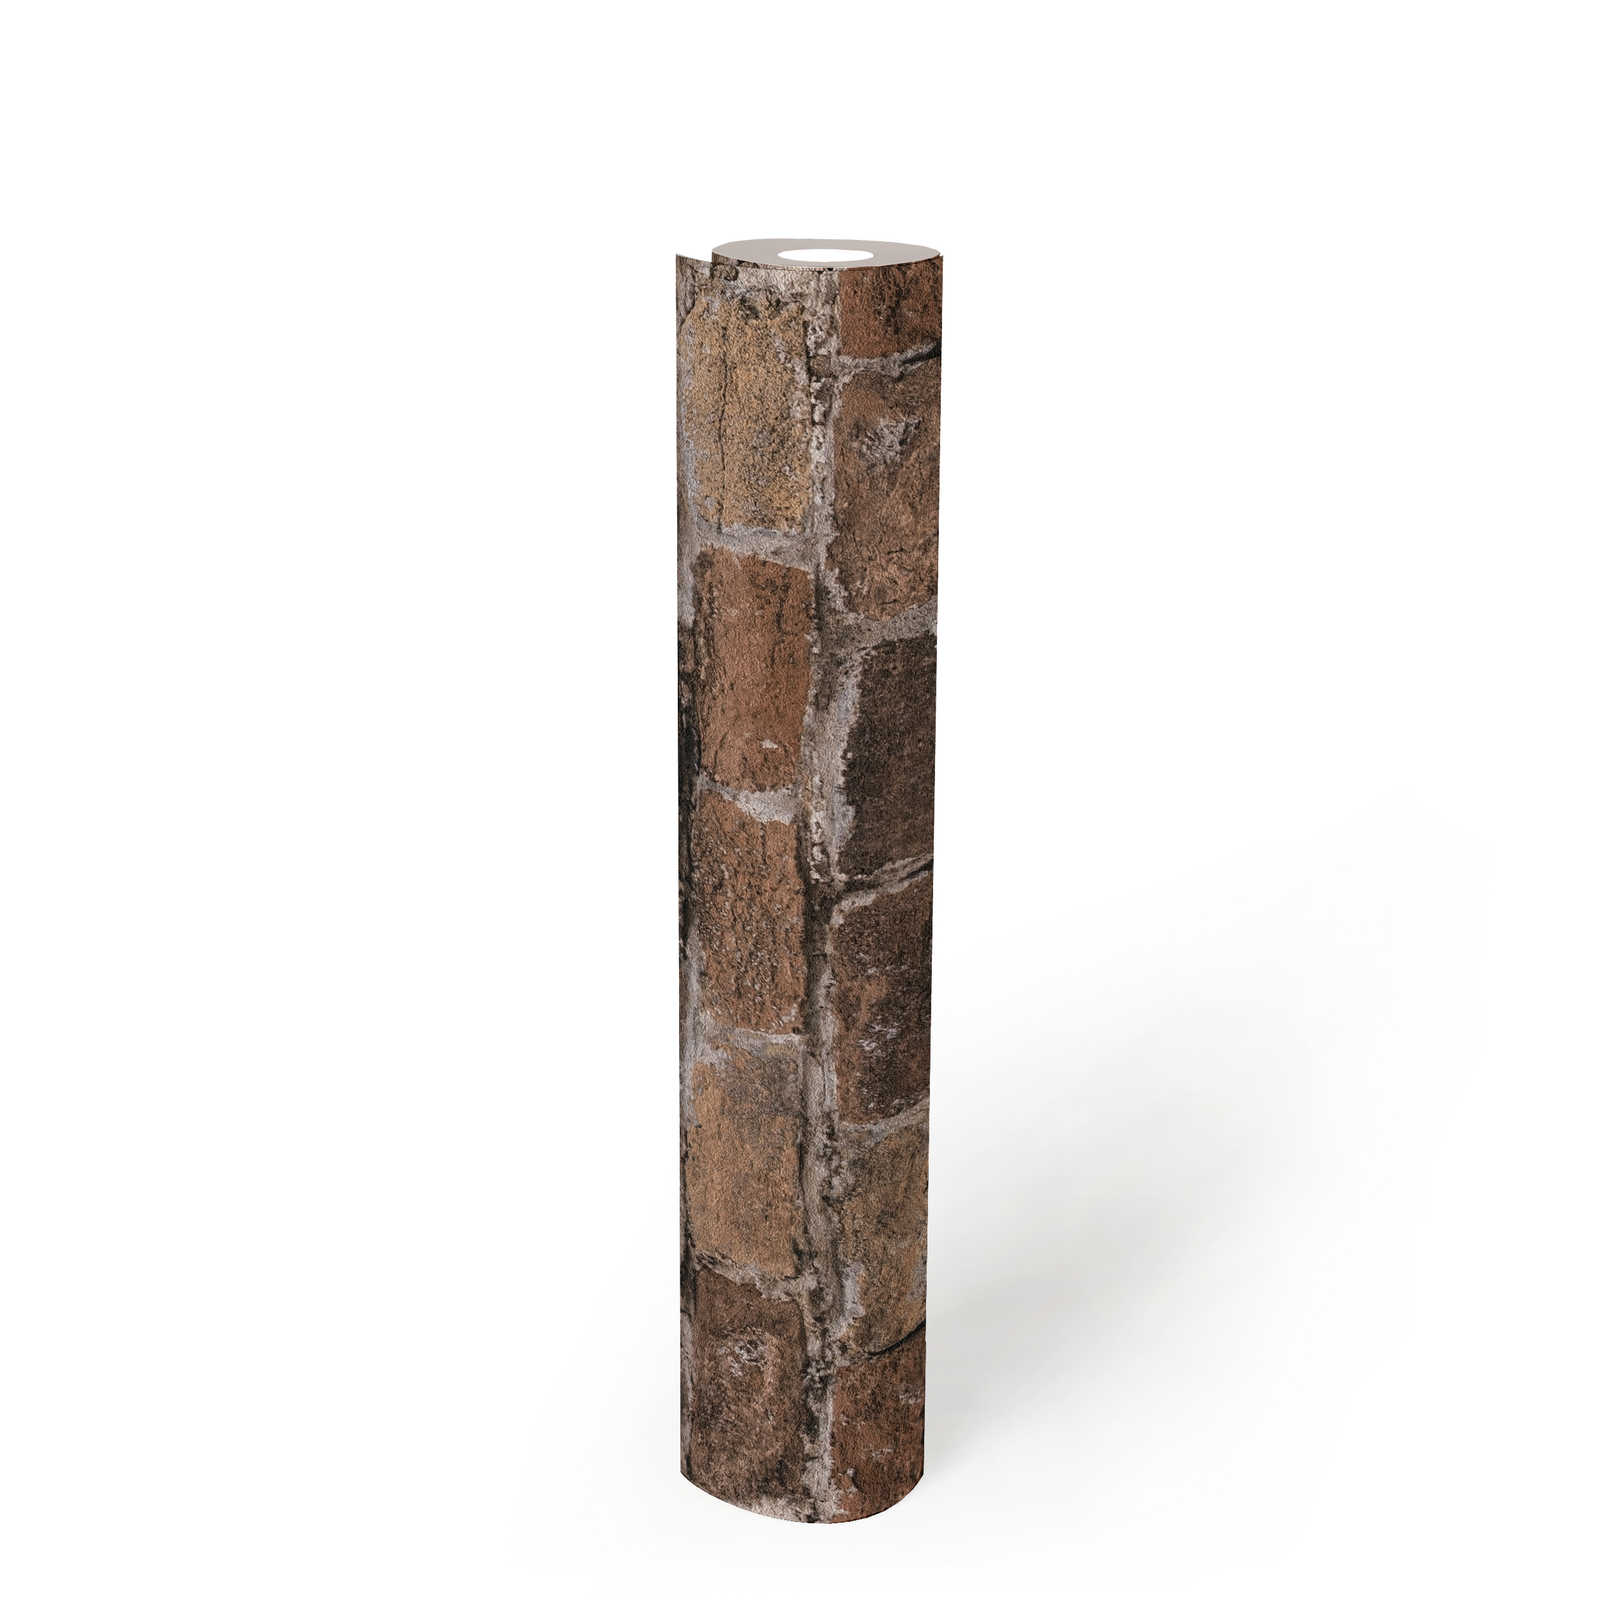             Stone-look non-woven wallpaper with brick design - brown
        